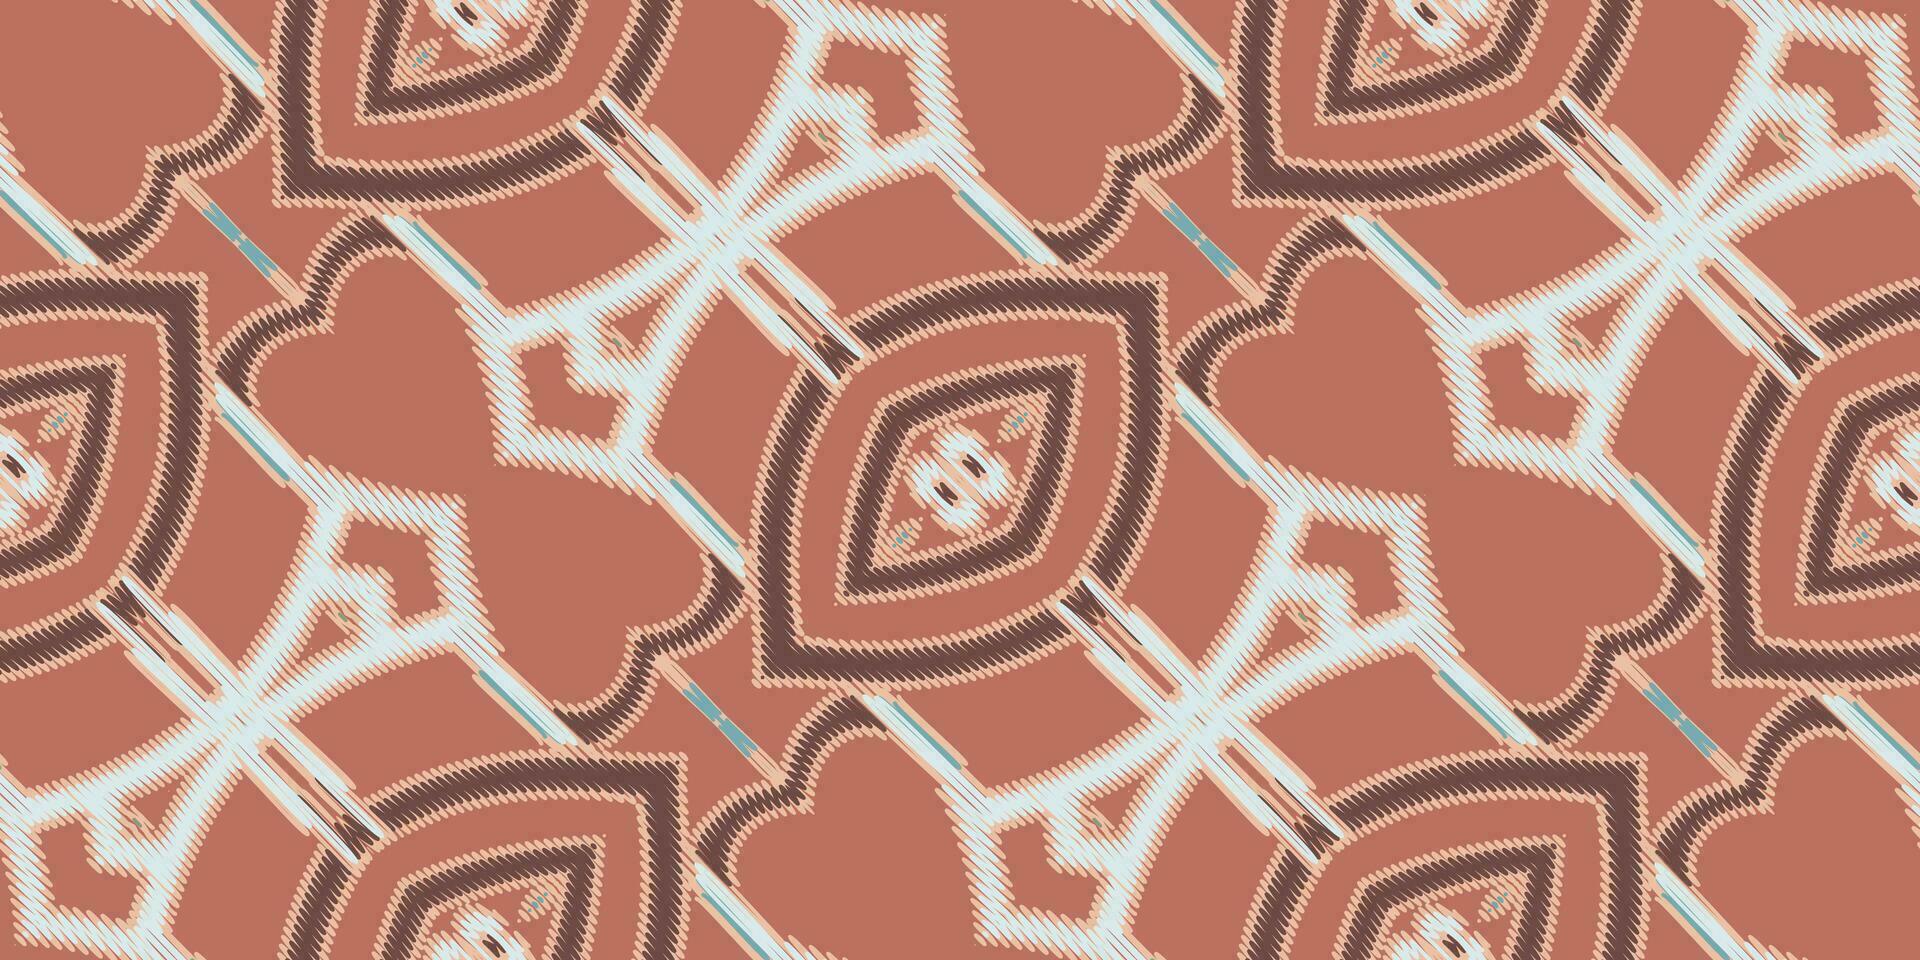 silke tyg patola sari mönster sömlös australier ursprunglig mönster motiv broderi, ikat broderi vektor design för skriva ut kurta mönster mughal motiv gobeläng mönster blommig upprepa